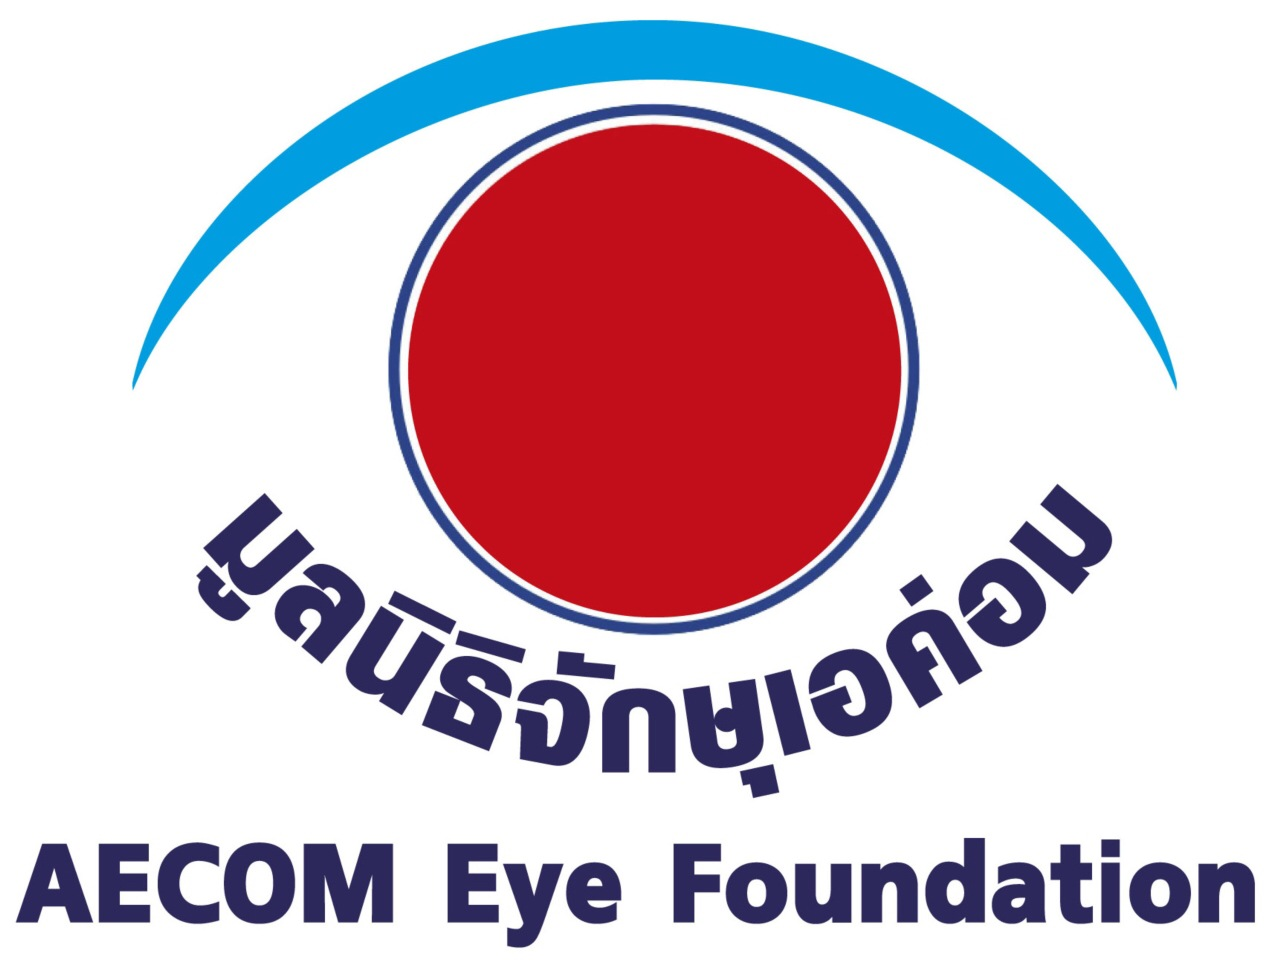 Aecom Eye Foundation logo